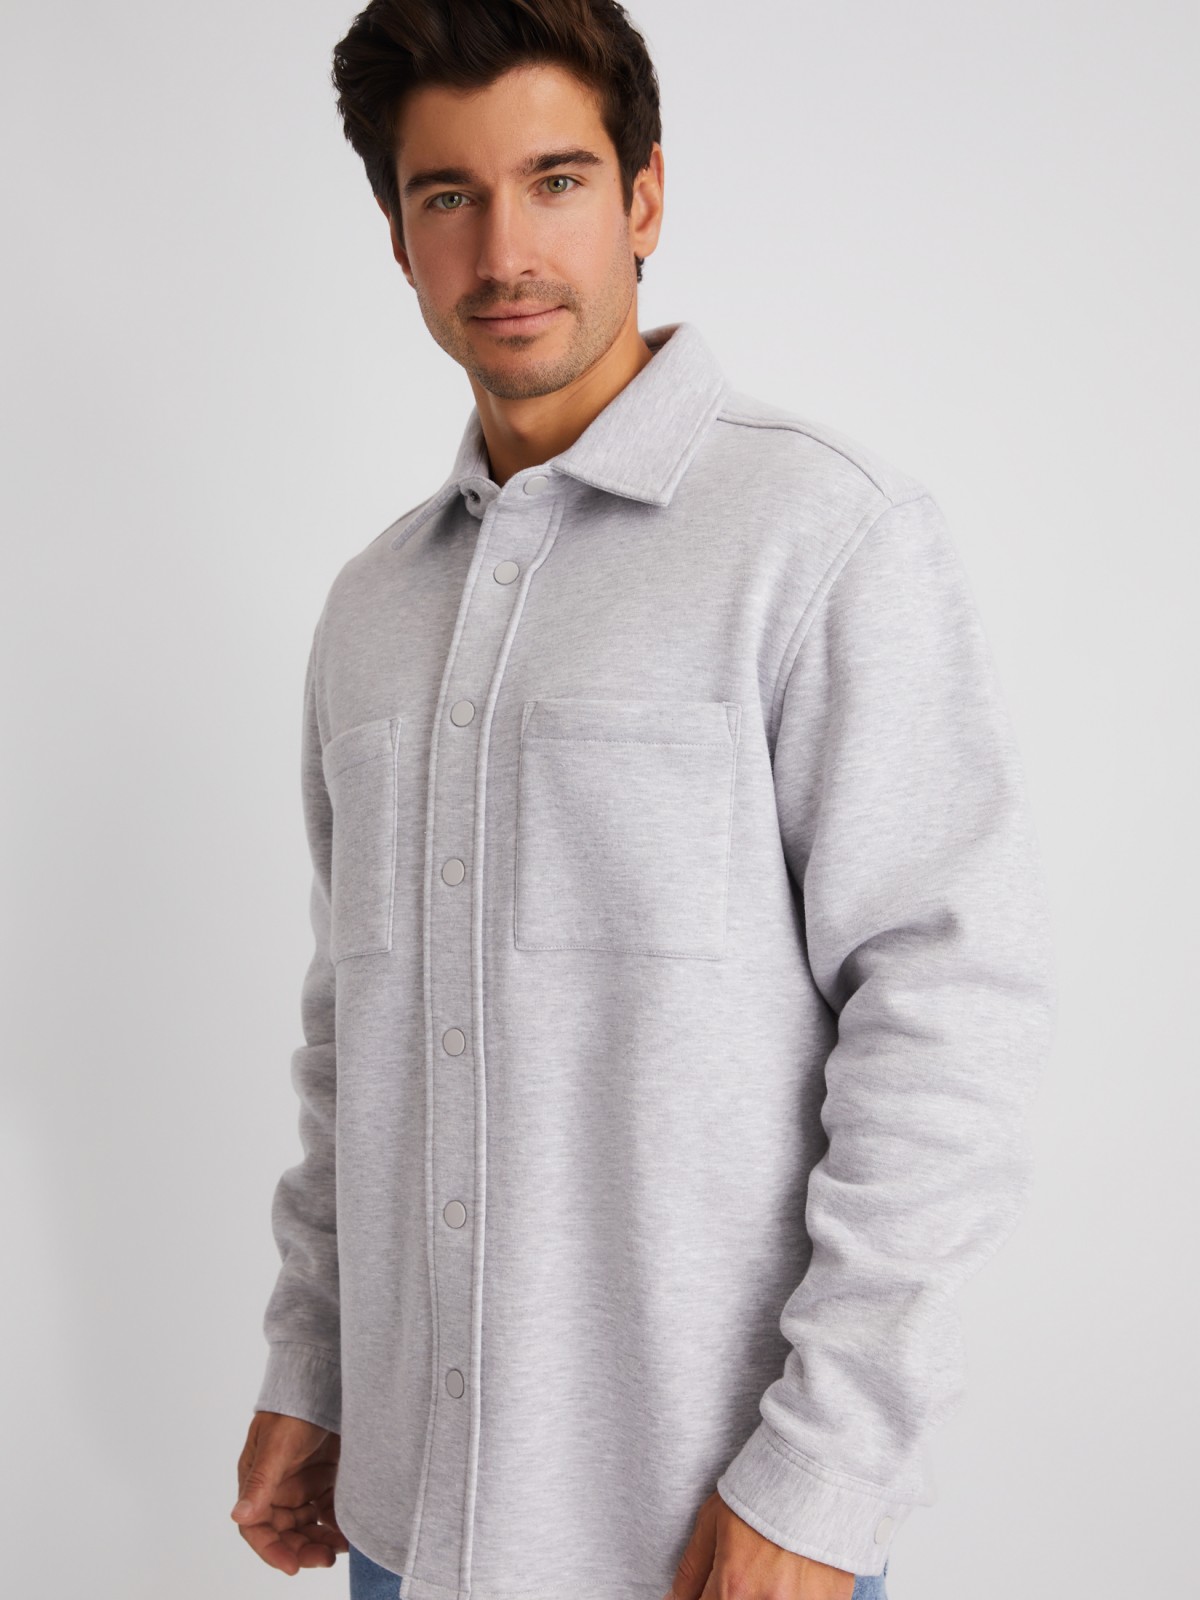 Утеплённая трикотажная куртка-рубашка с начёсом zolla 01411432F023, цвет серый, размер S - фото 4